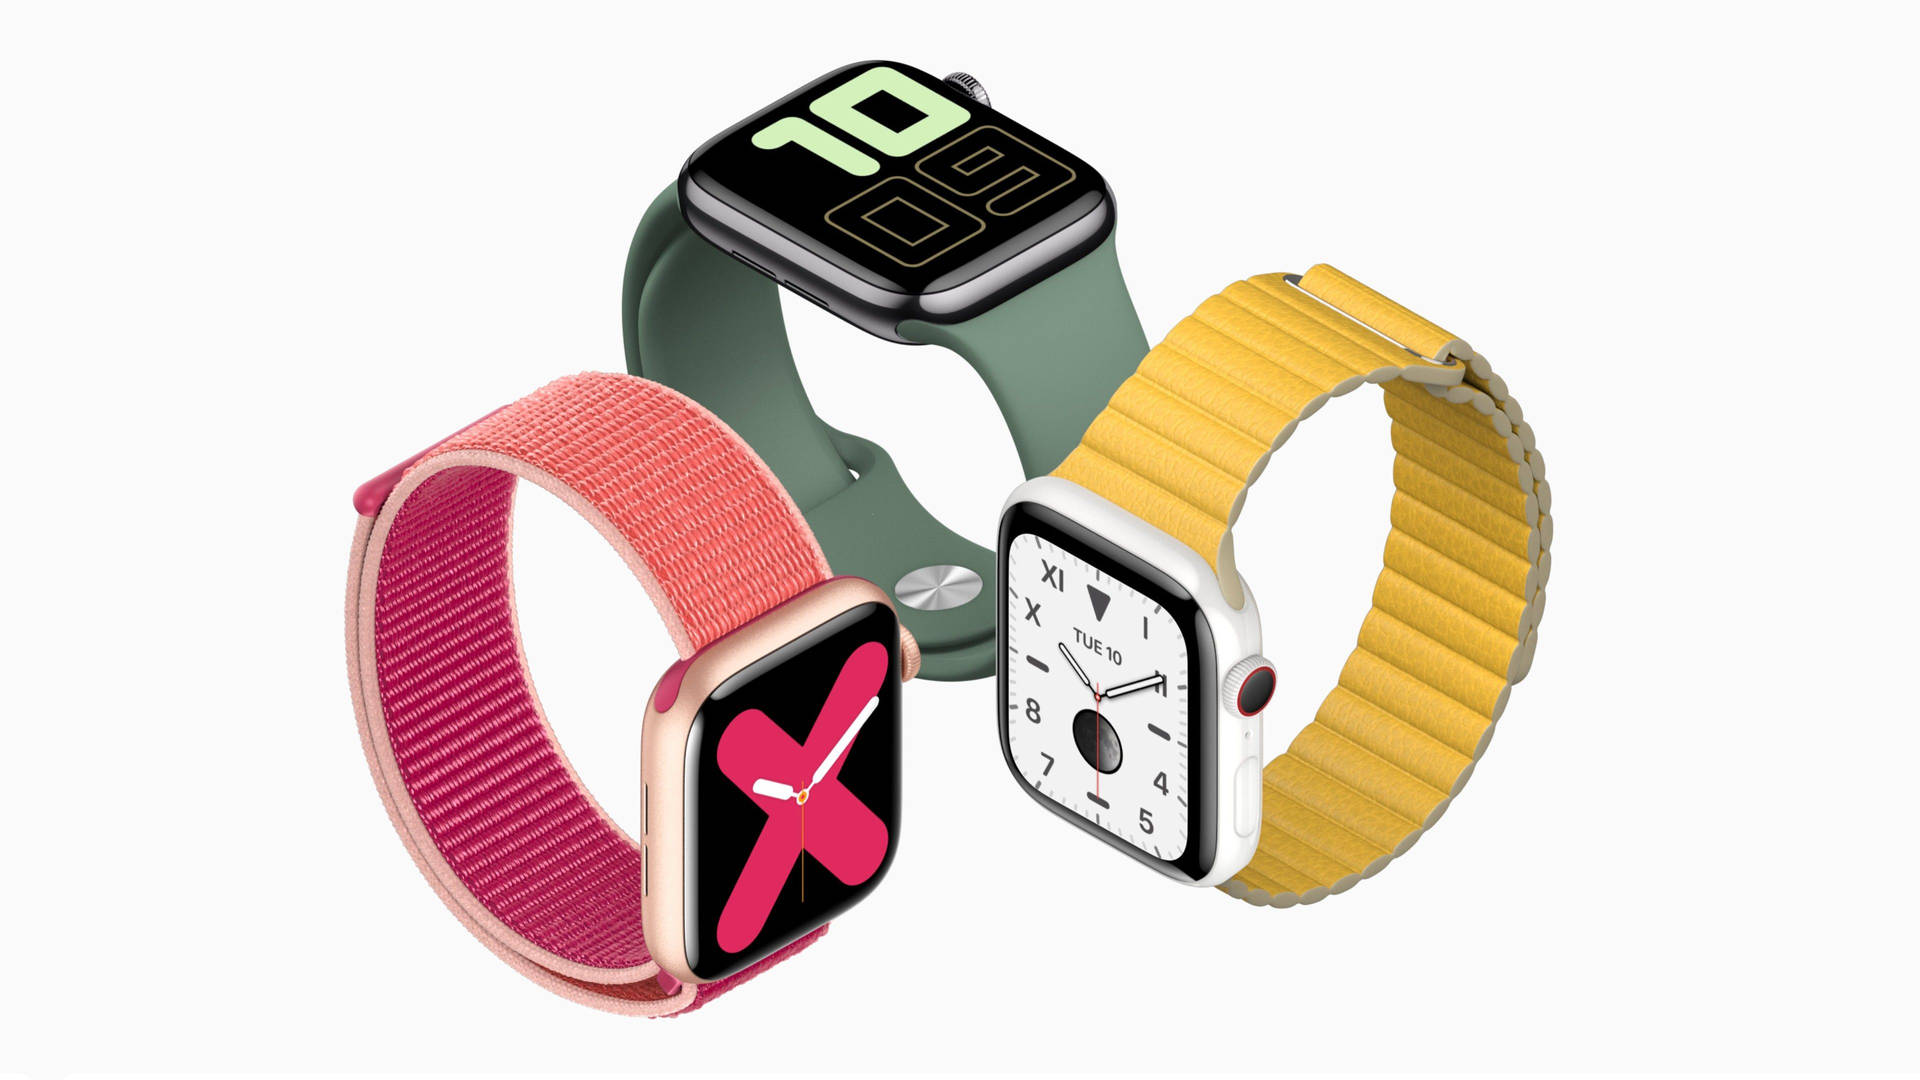 Free Apple Watch Wallpaper Downloads, [100+] Apple Watch Wallpapers for  FREE 